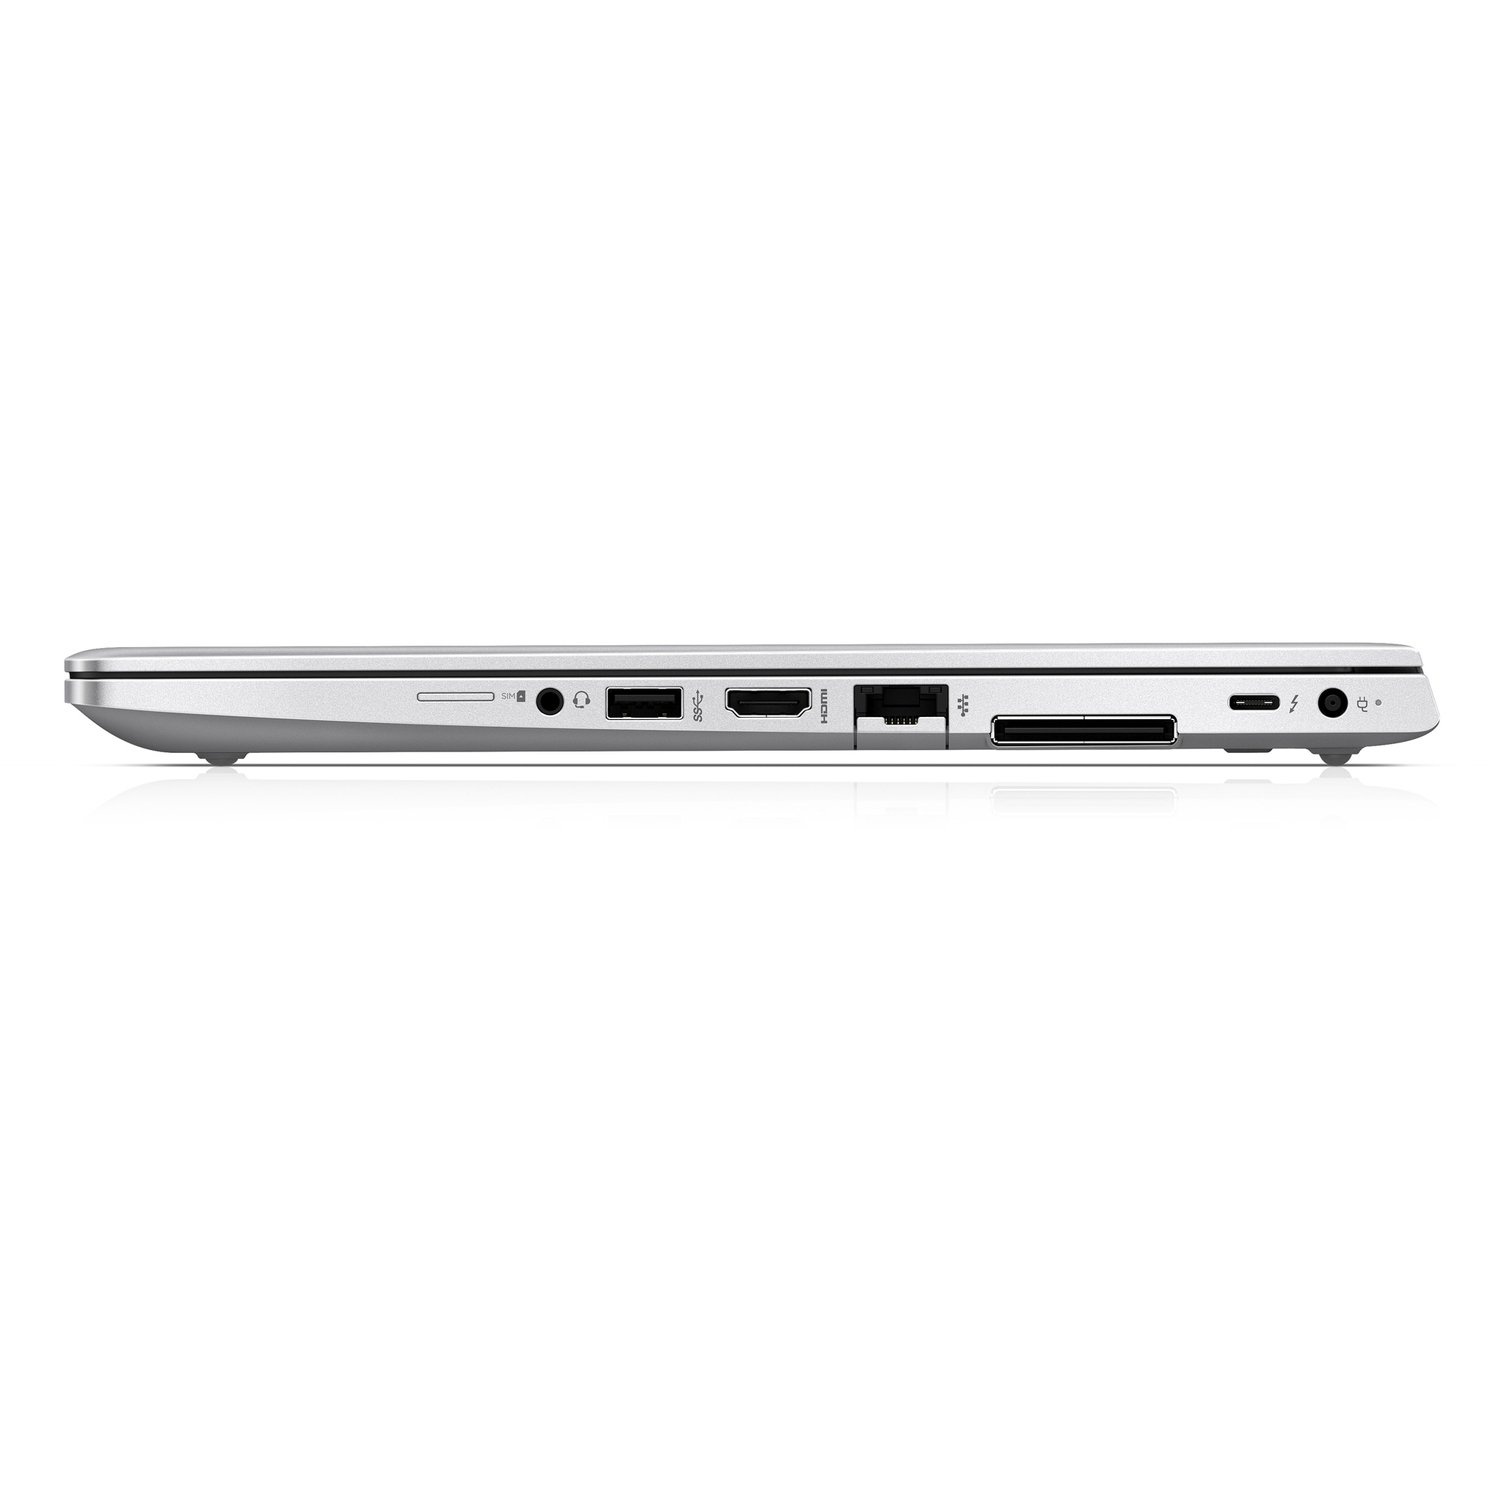 Ноутбук HP EliteBook 830 G5 Core i5-7200U 2.5GHz,13.3" FHD (1920x1080) IPS AG,8Gb DDR4(1),256Gb SSD,50Wh LL,FPR,1.4kg,3y,Silver,Win10Pro-15981